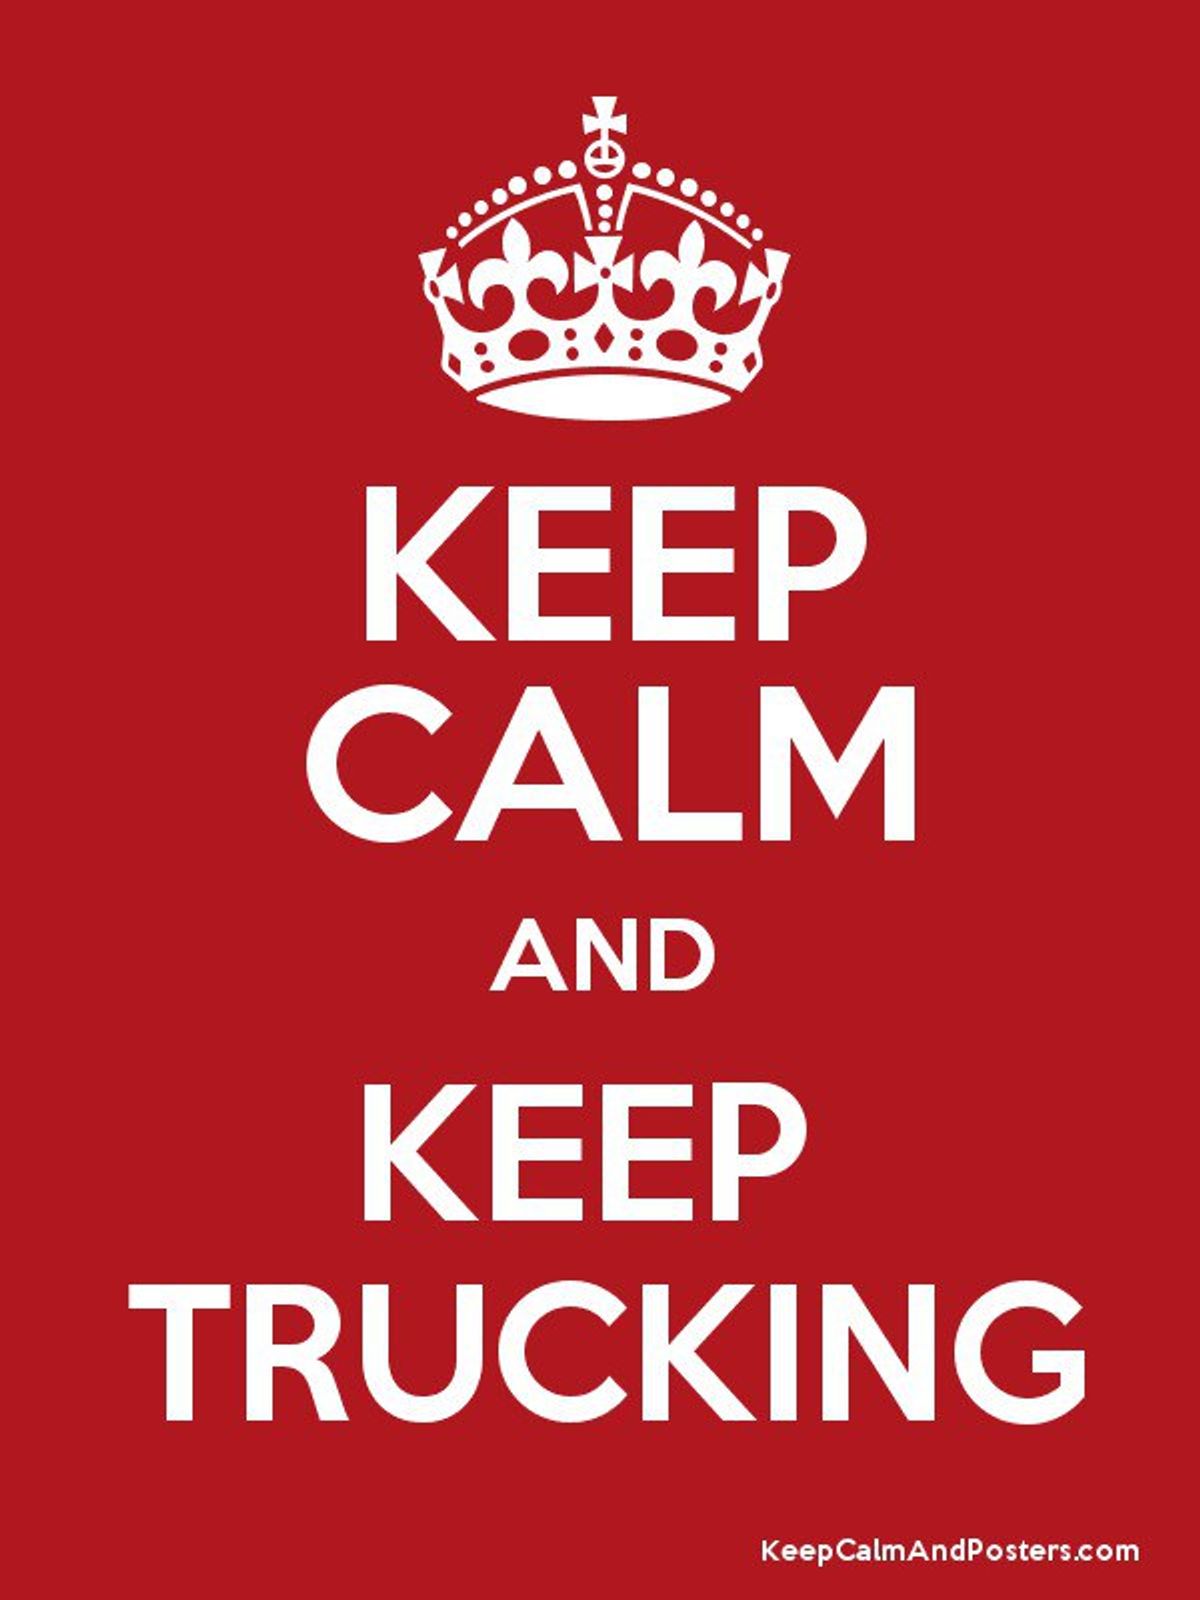 "Keep Trucking"